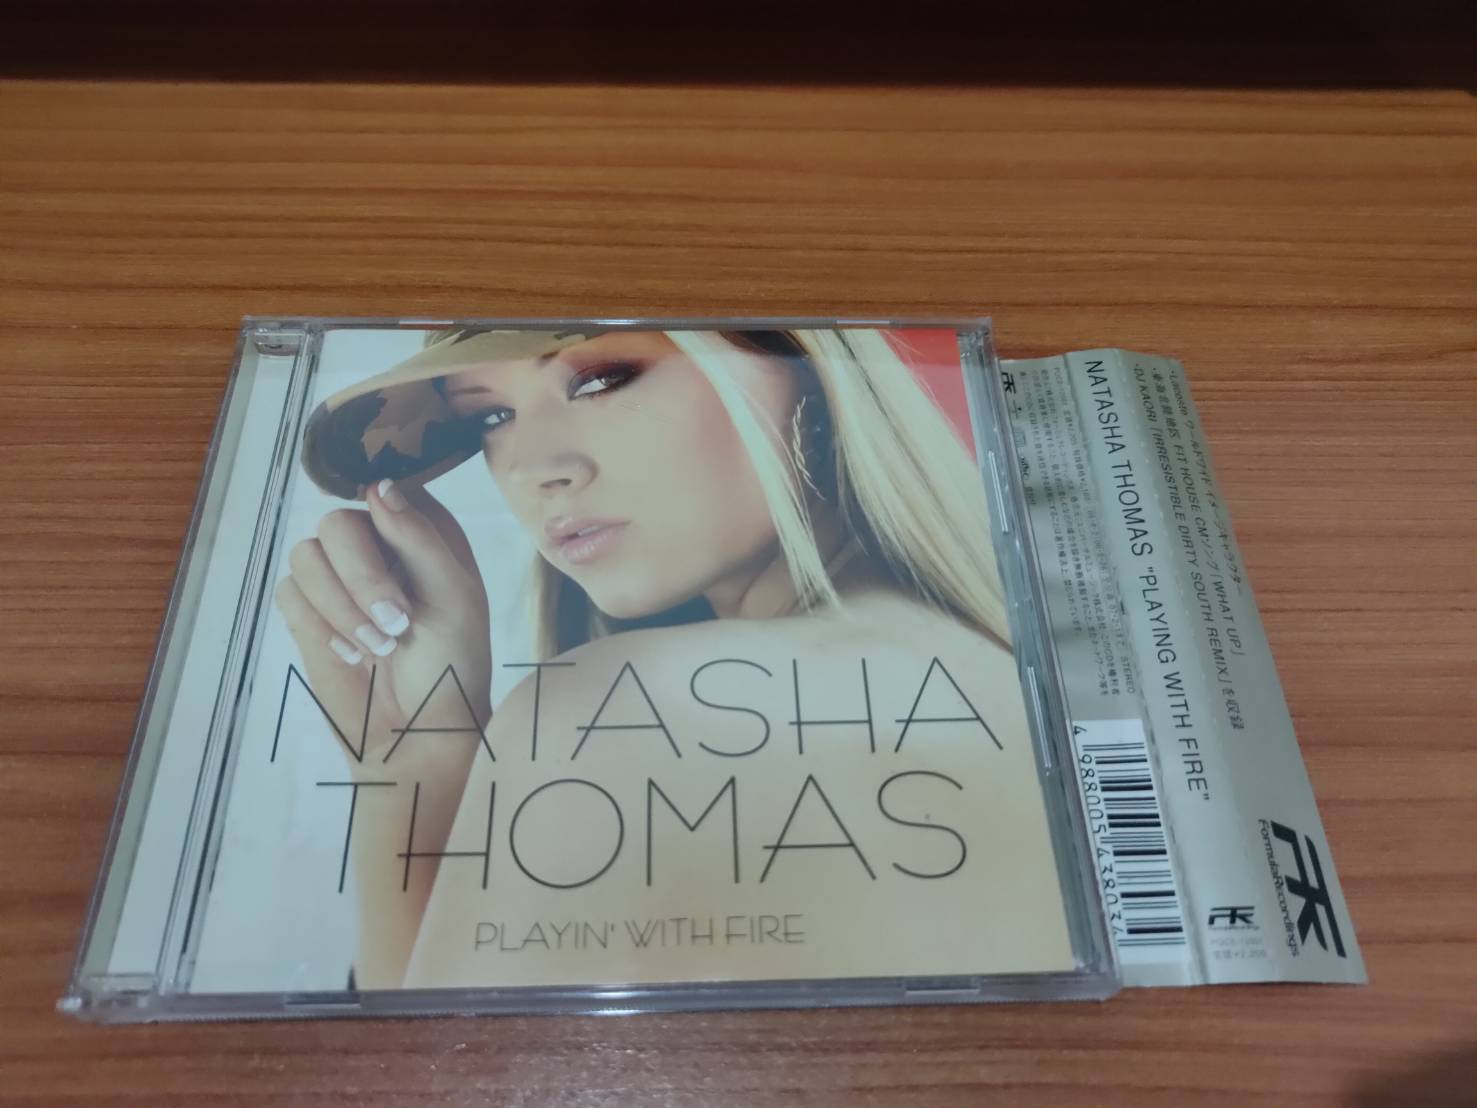 CD.MUSIC ซีดีเพลง เพลงสากล NATASHA THOMAS PIAYIN WITH FIRE